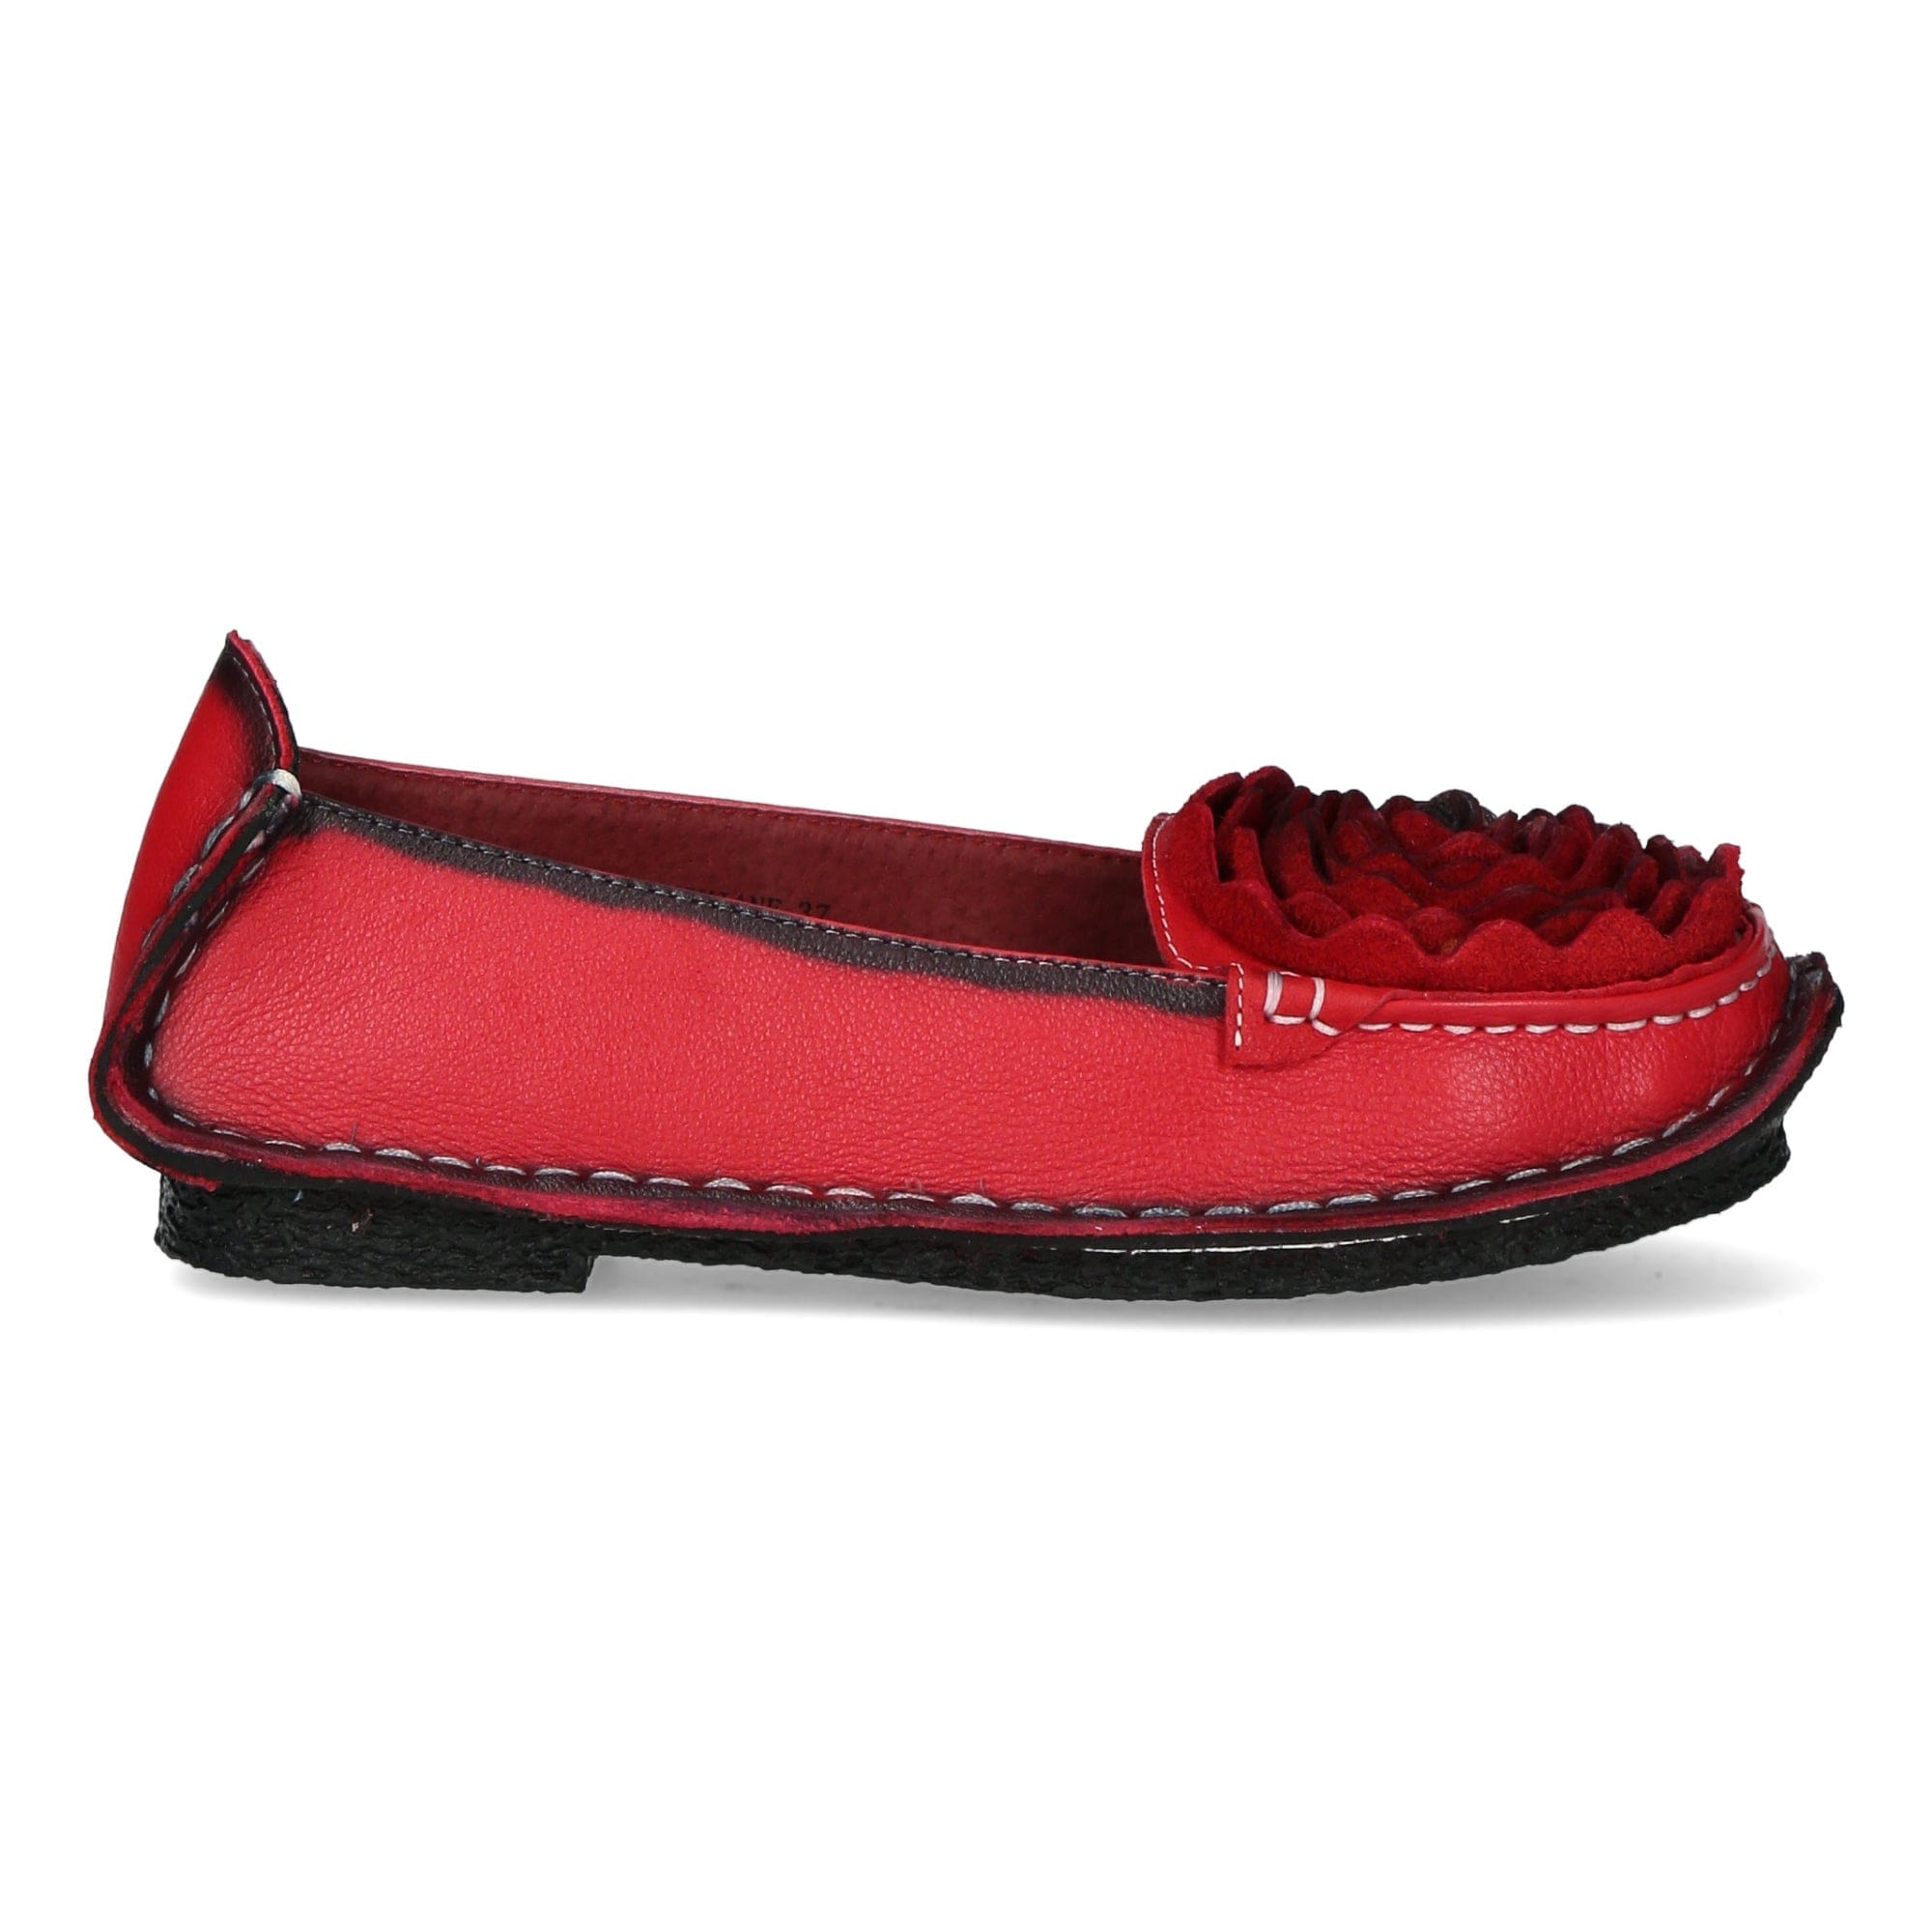 Chaussures Viviane - 35 / Rouge - Mocassin